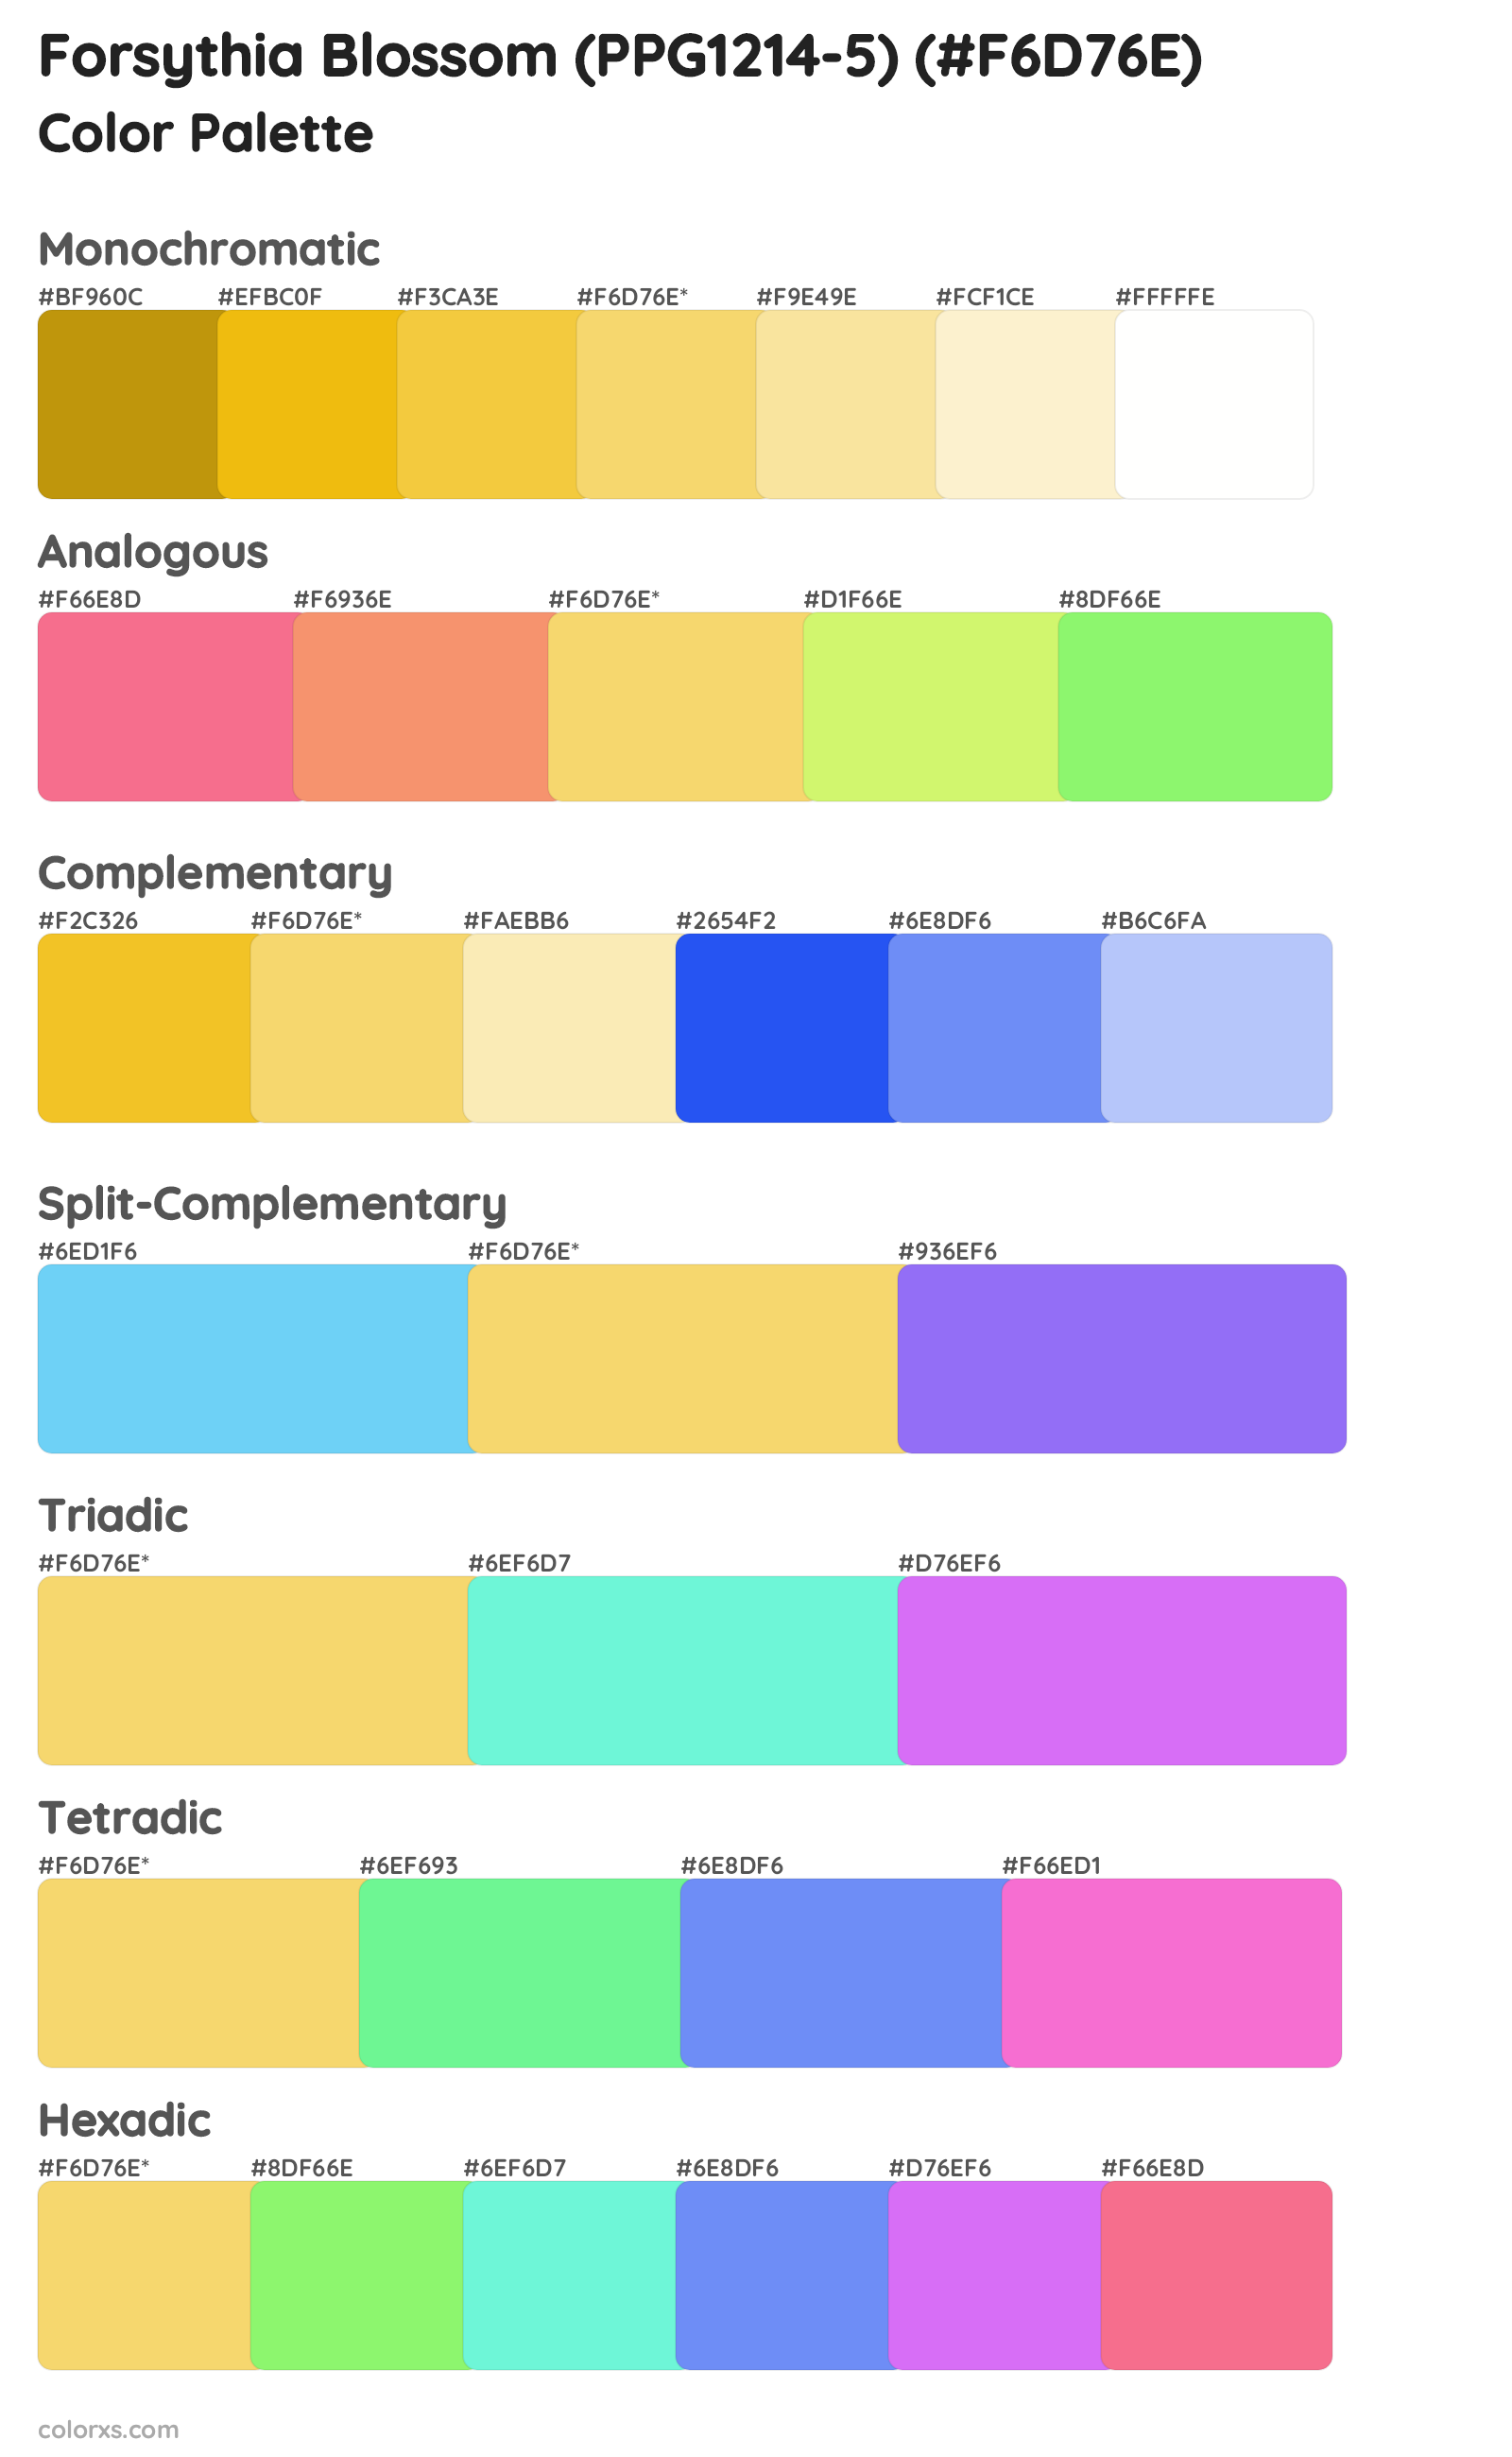 Forsythia Blossom (PPG1214-5) Color Scheme Palettes